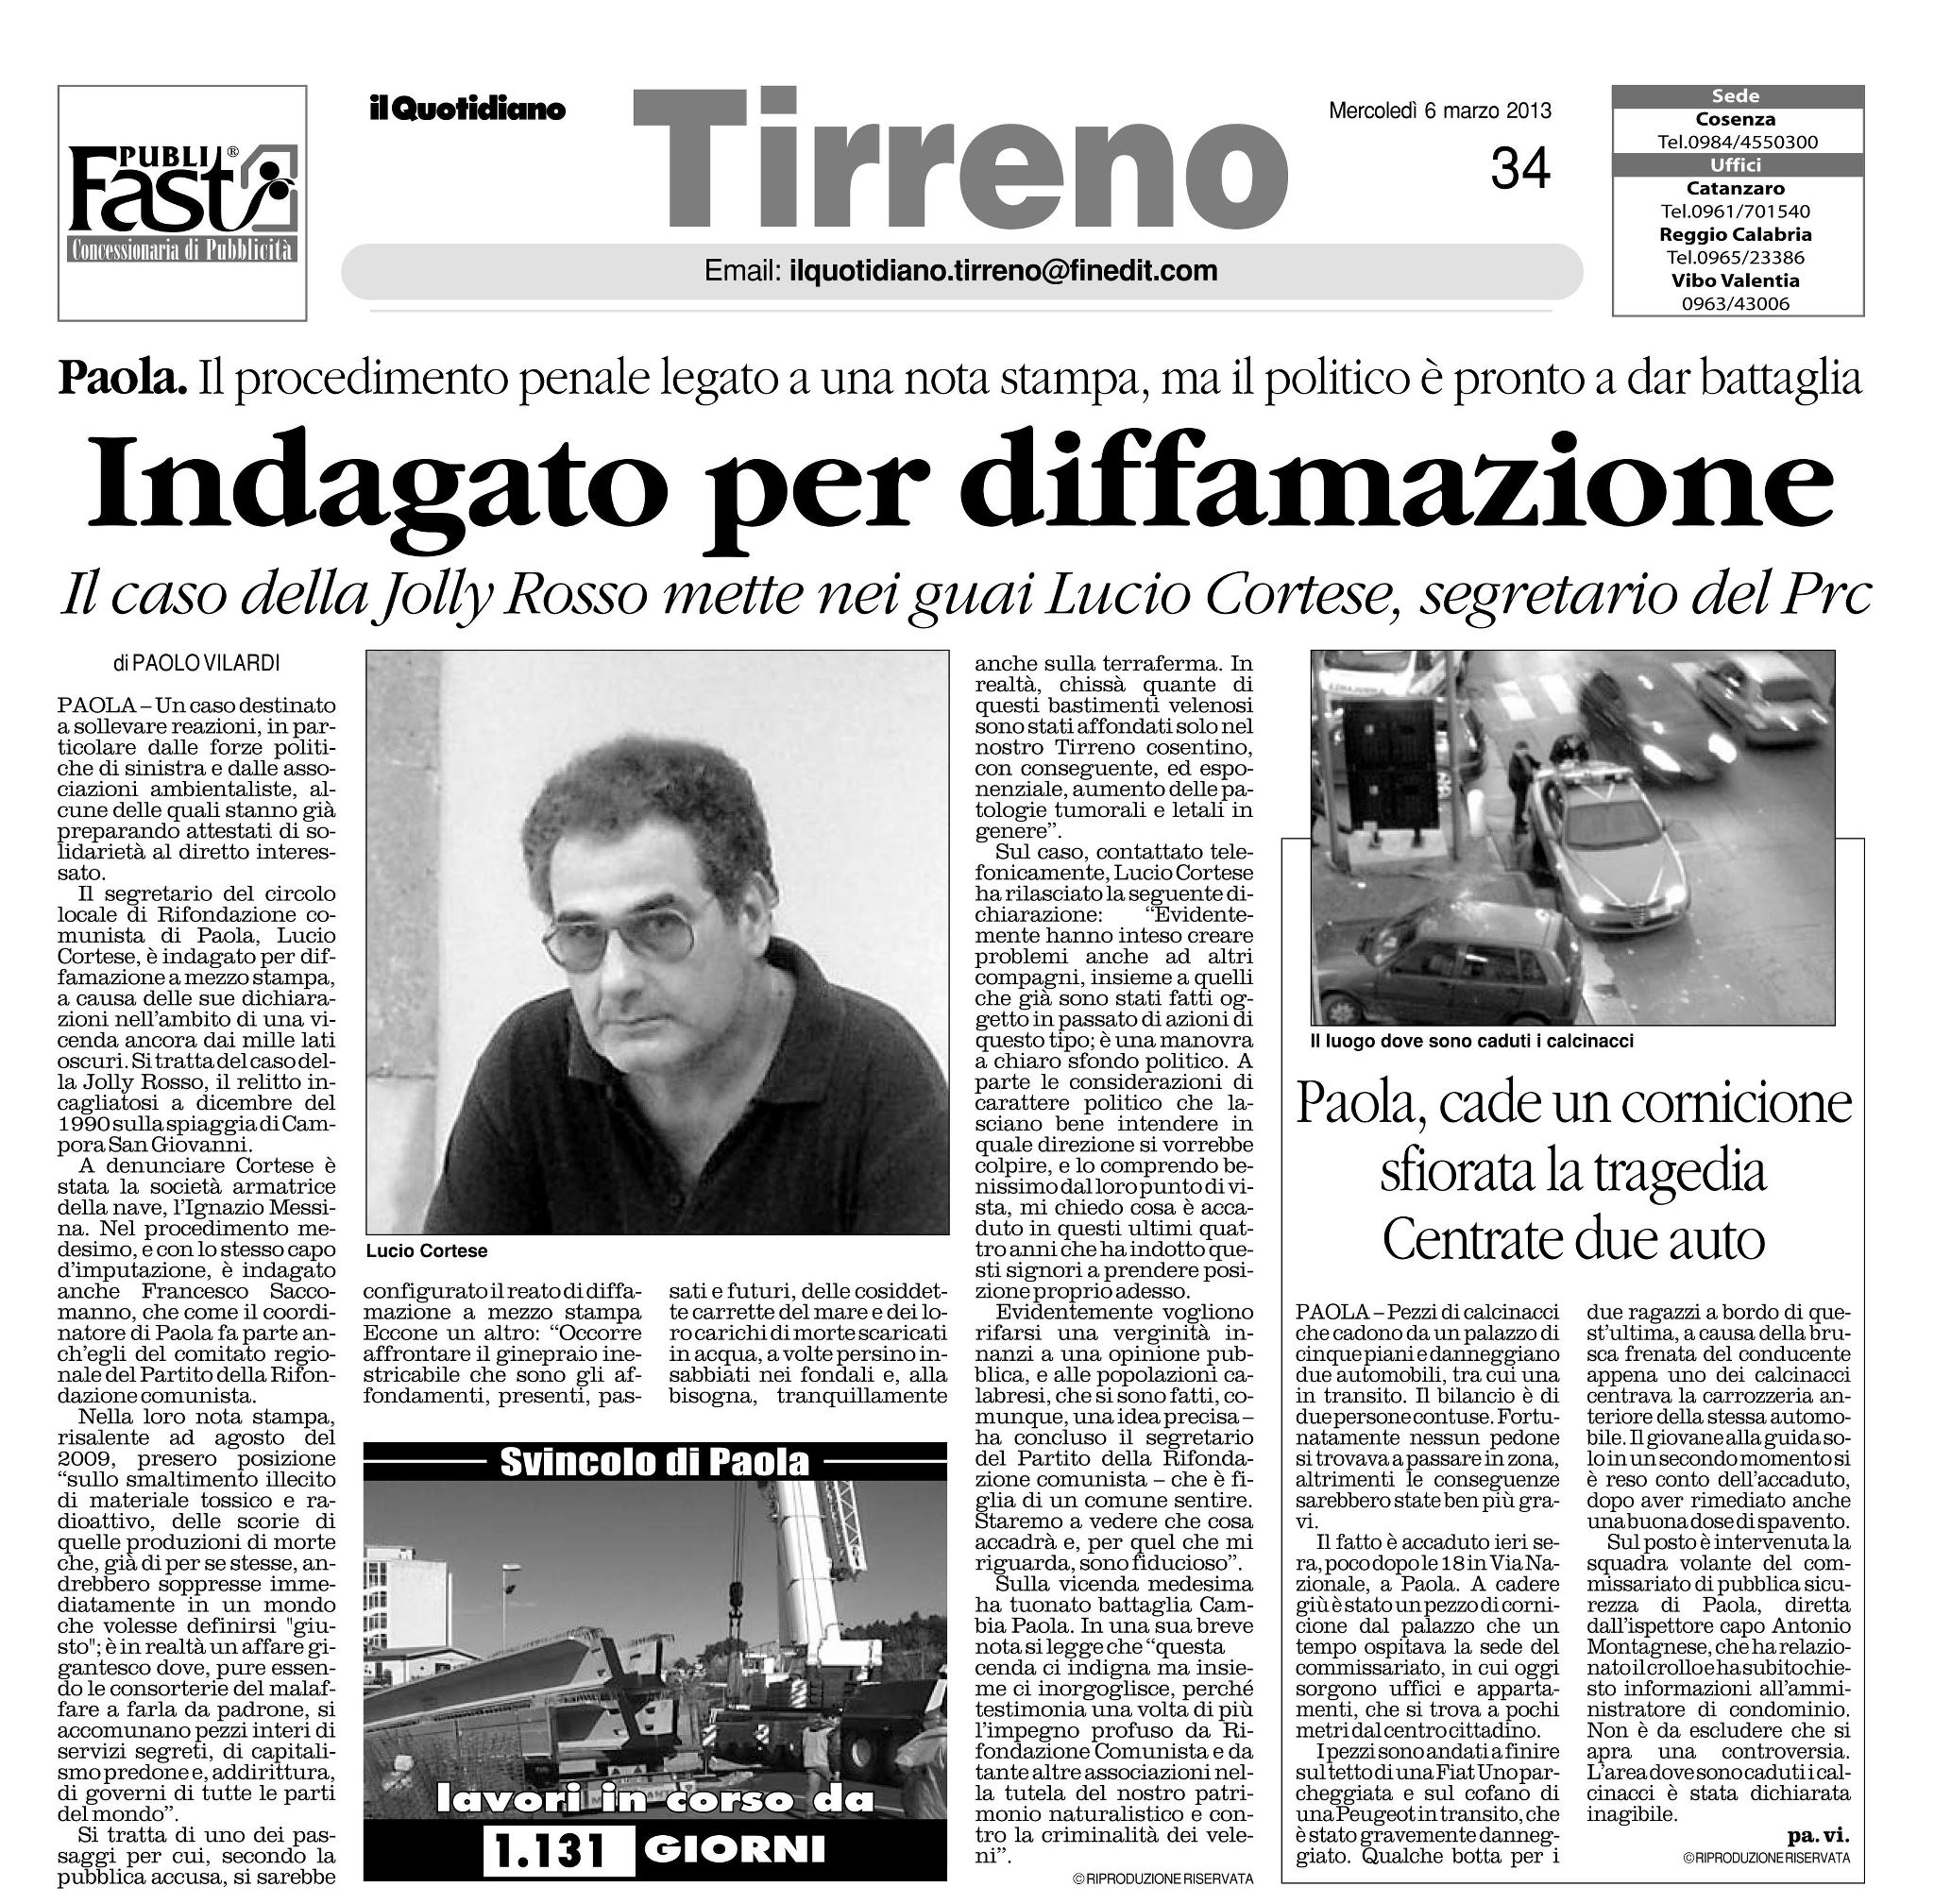 Thumbnail image for /public/upload/2013/3/634982663852543372_Querela Messina Saccomanno Cortese - IlQuotidiano.jpg